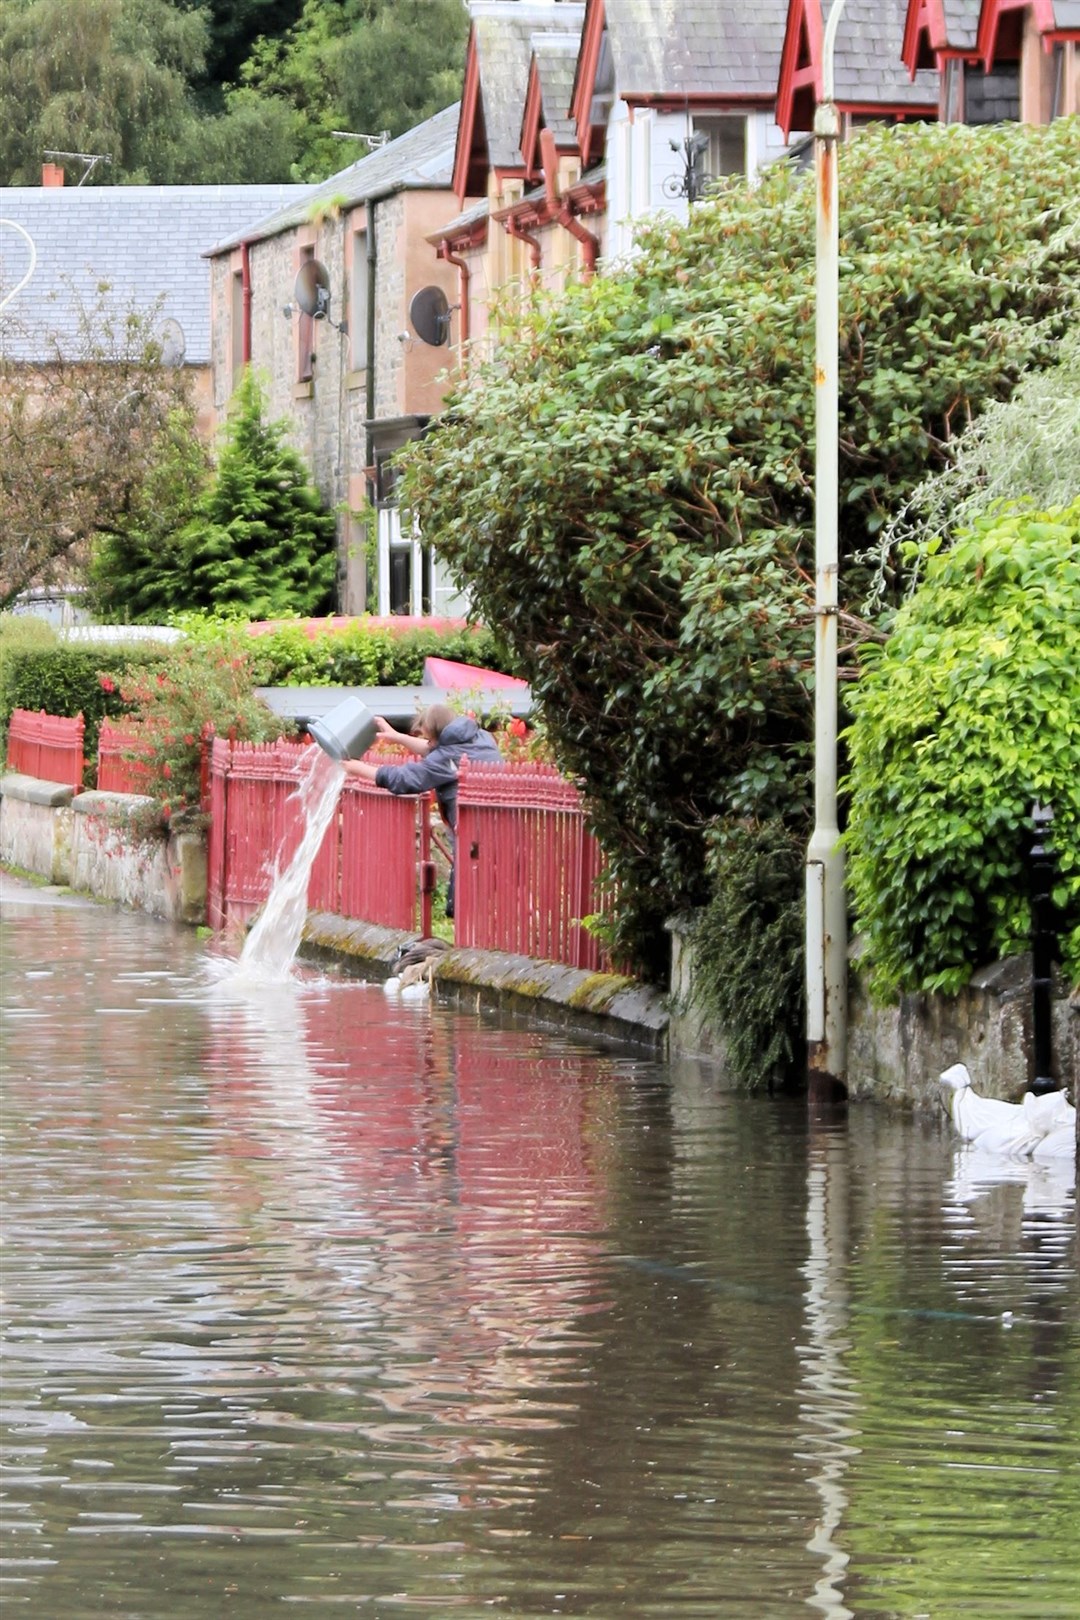 Flash floods again plagued Dingwall last week. Picture: David MacMaster.